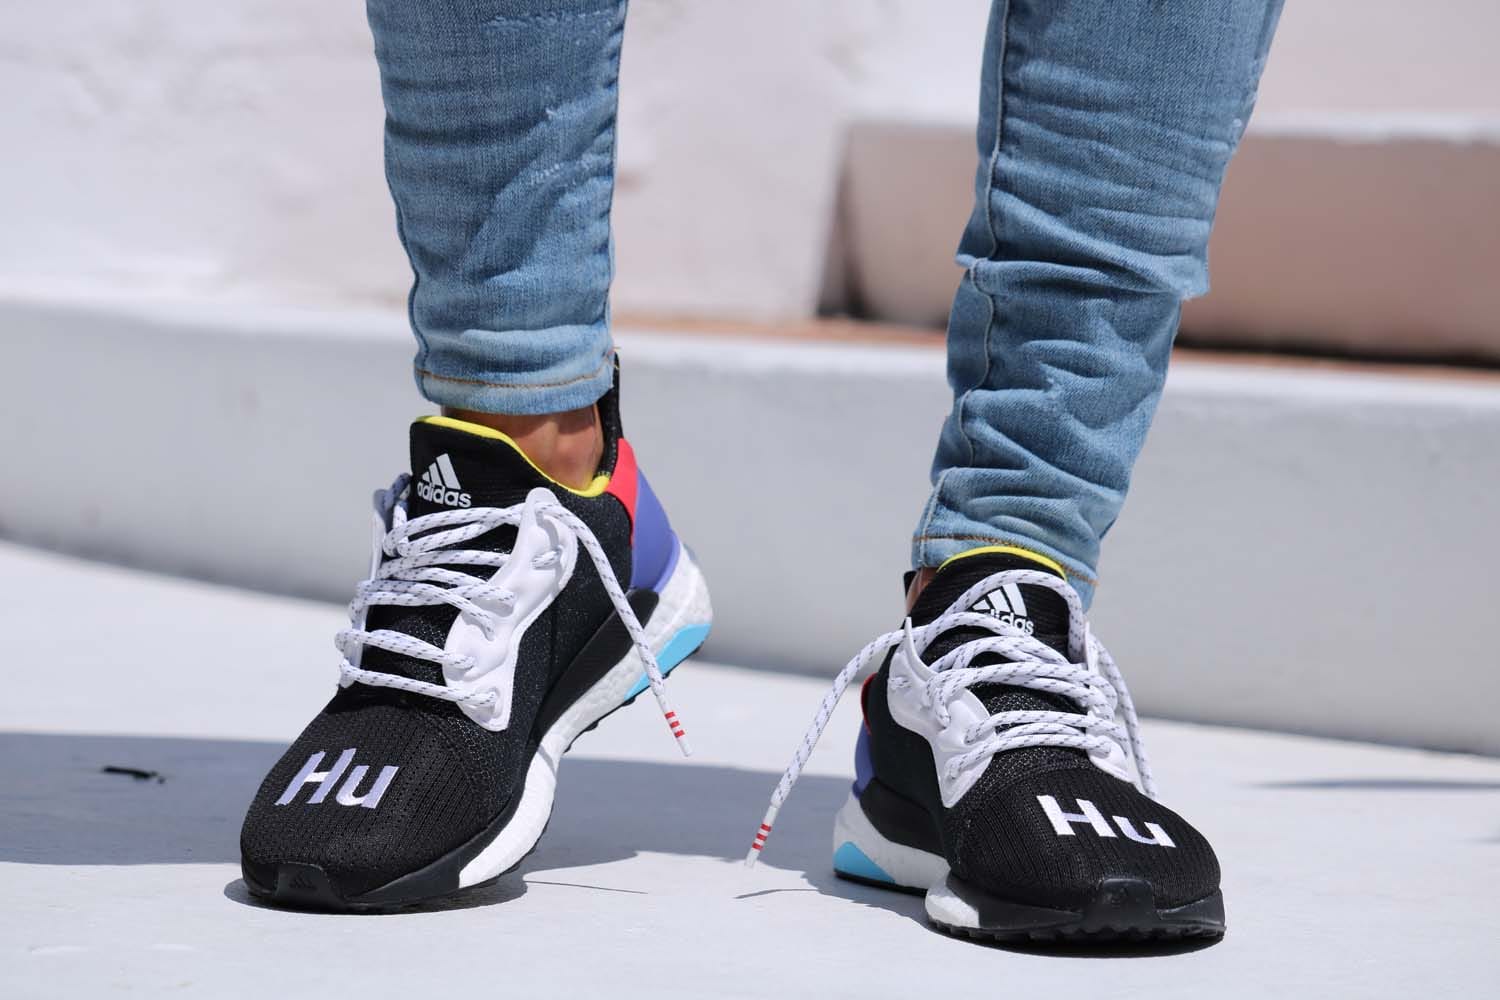 pharrell williams x adidas solar hu glide st shoes